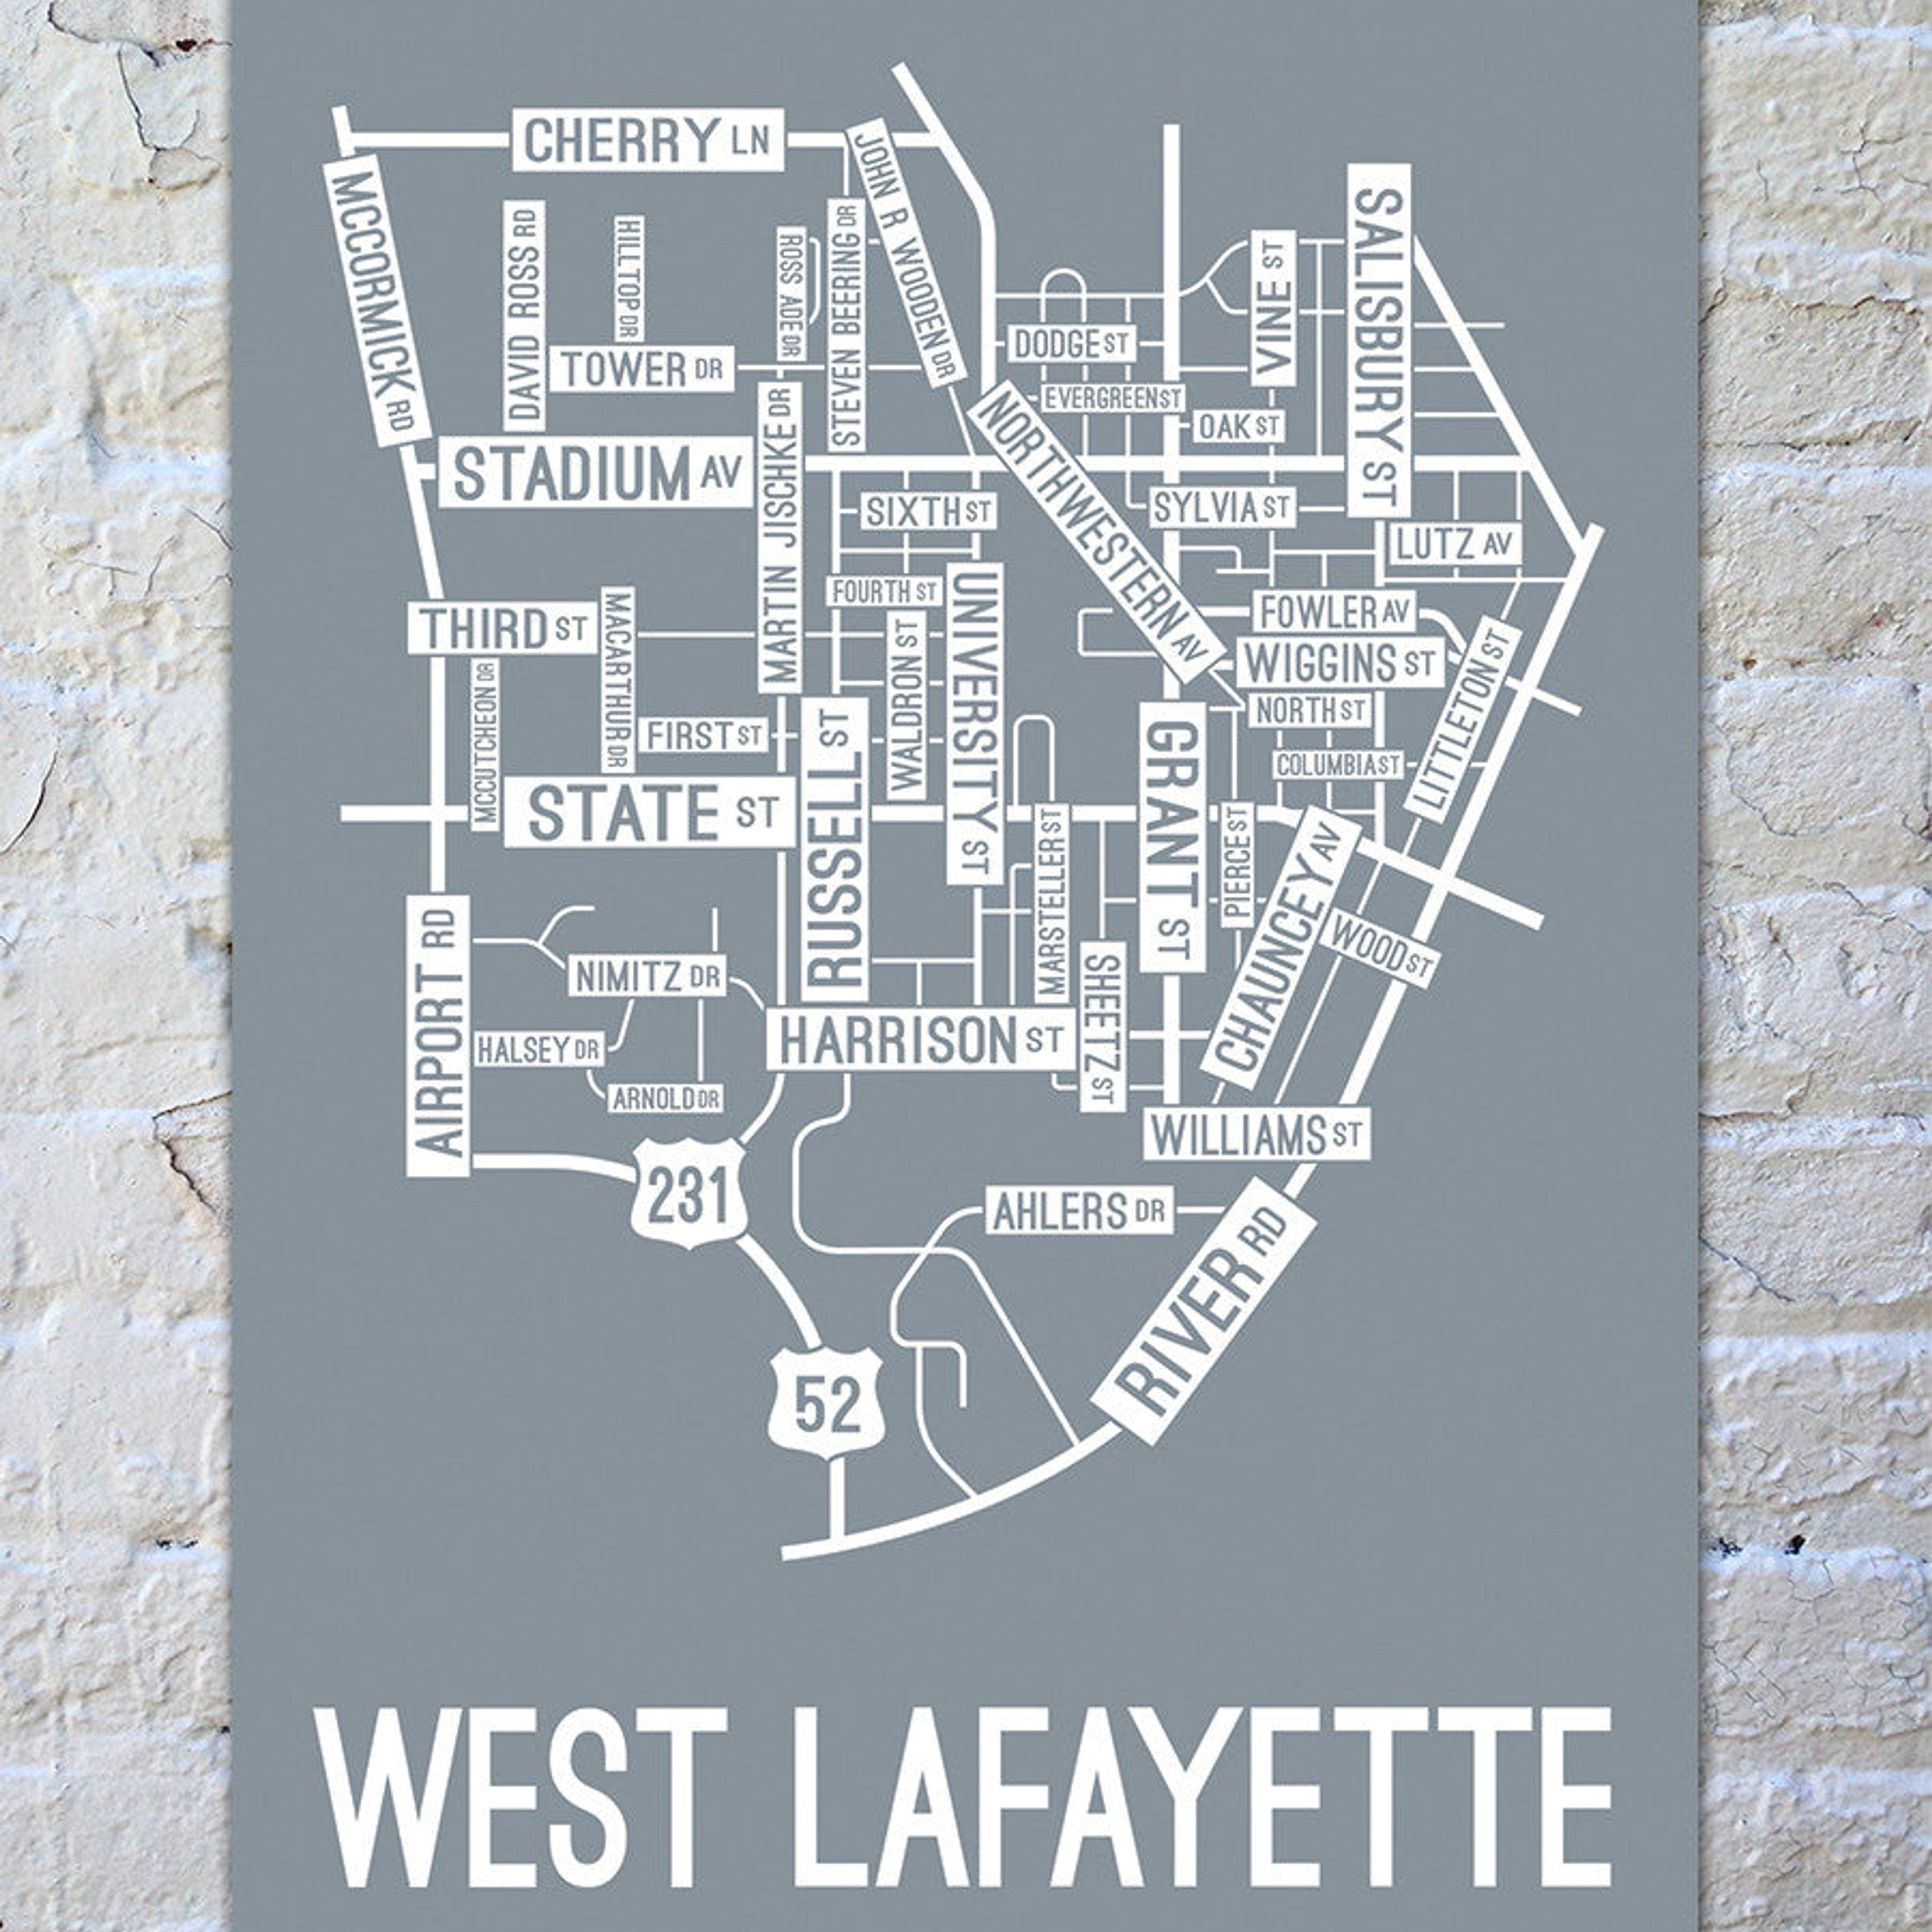 Louisville, Kentucky Street Map Print - School Street Posters